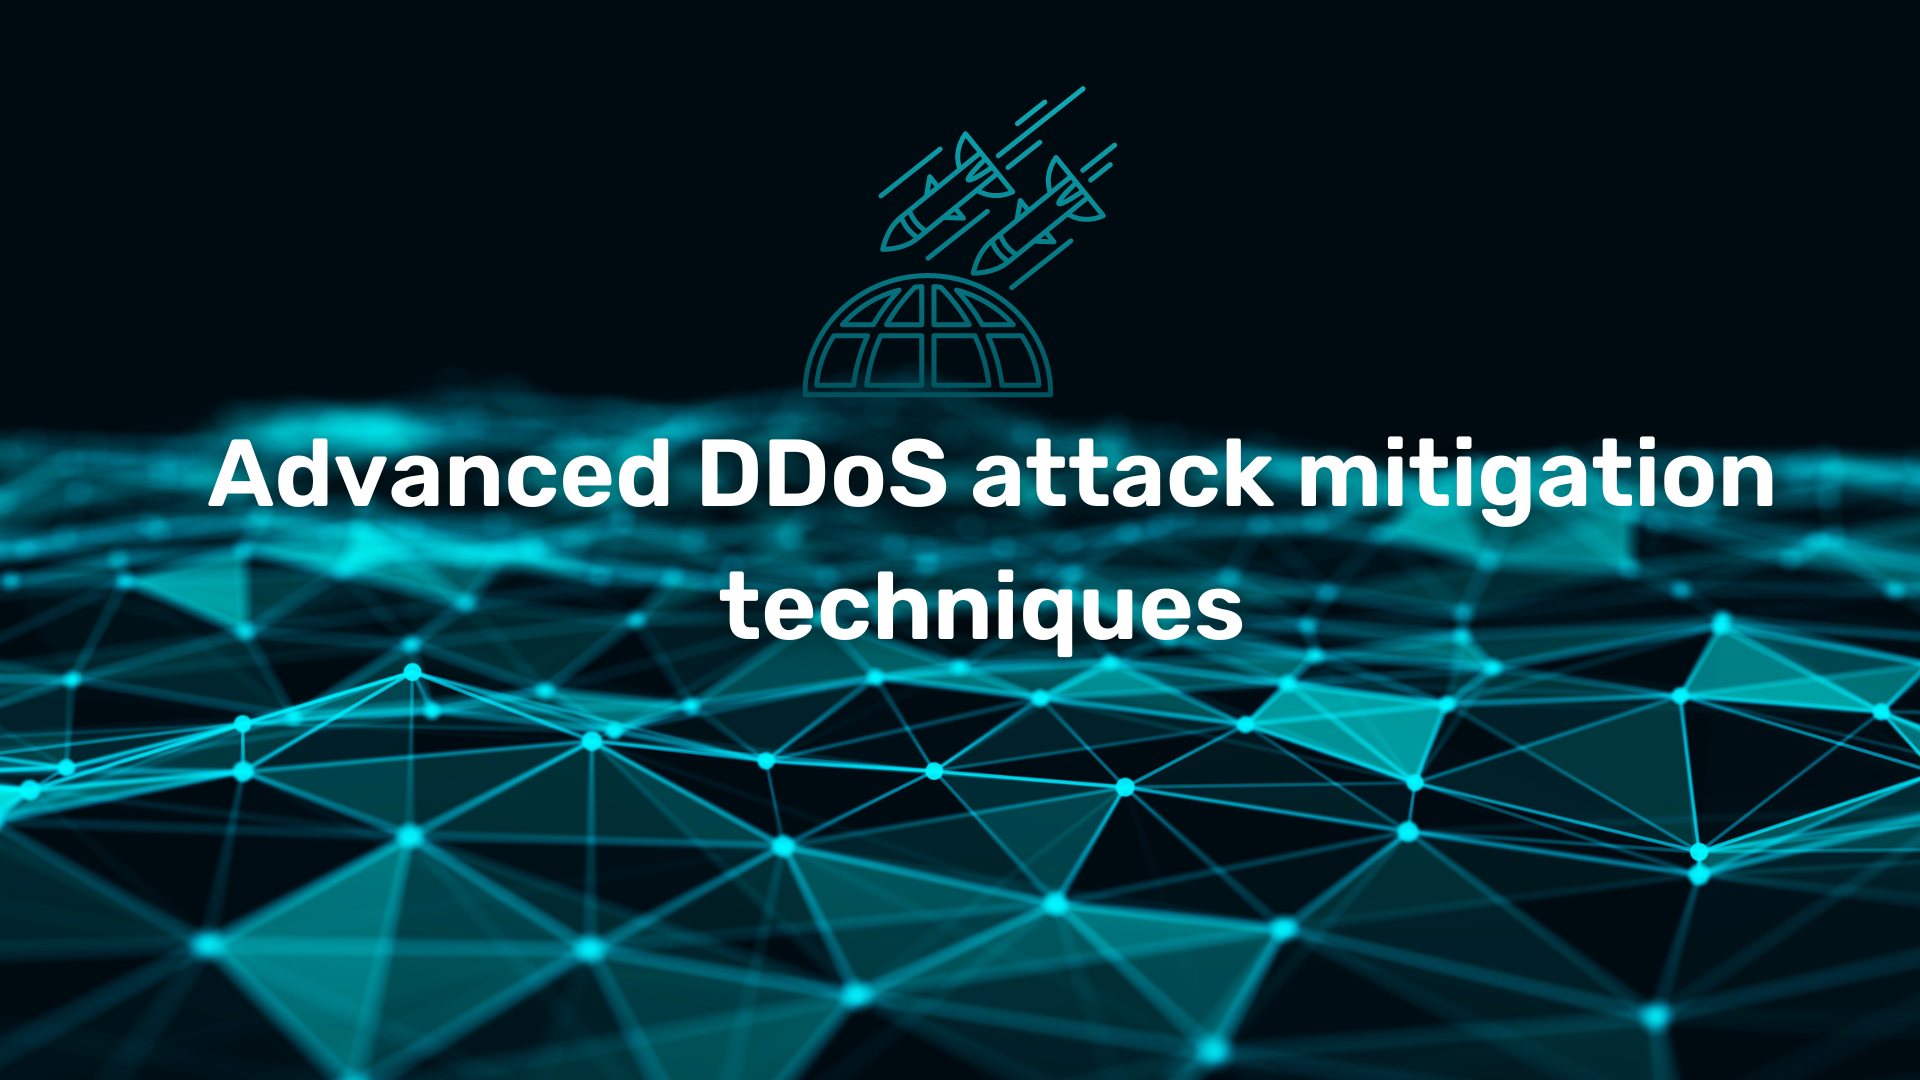 Advanced DDoS attack mitigation techniques in the cloud